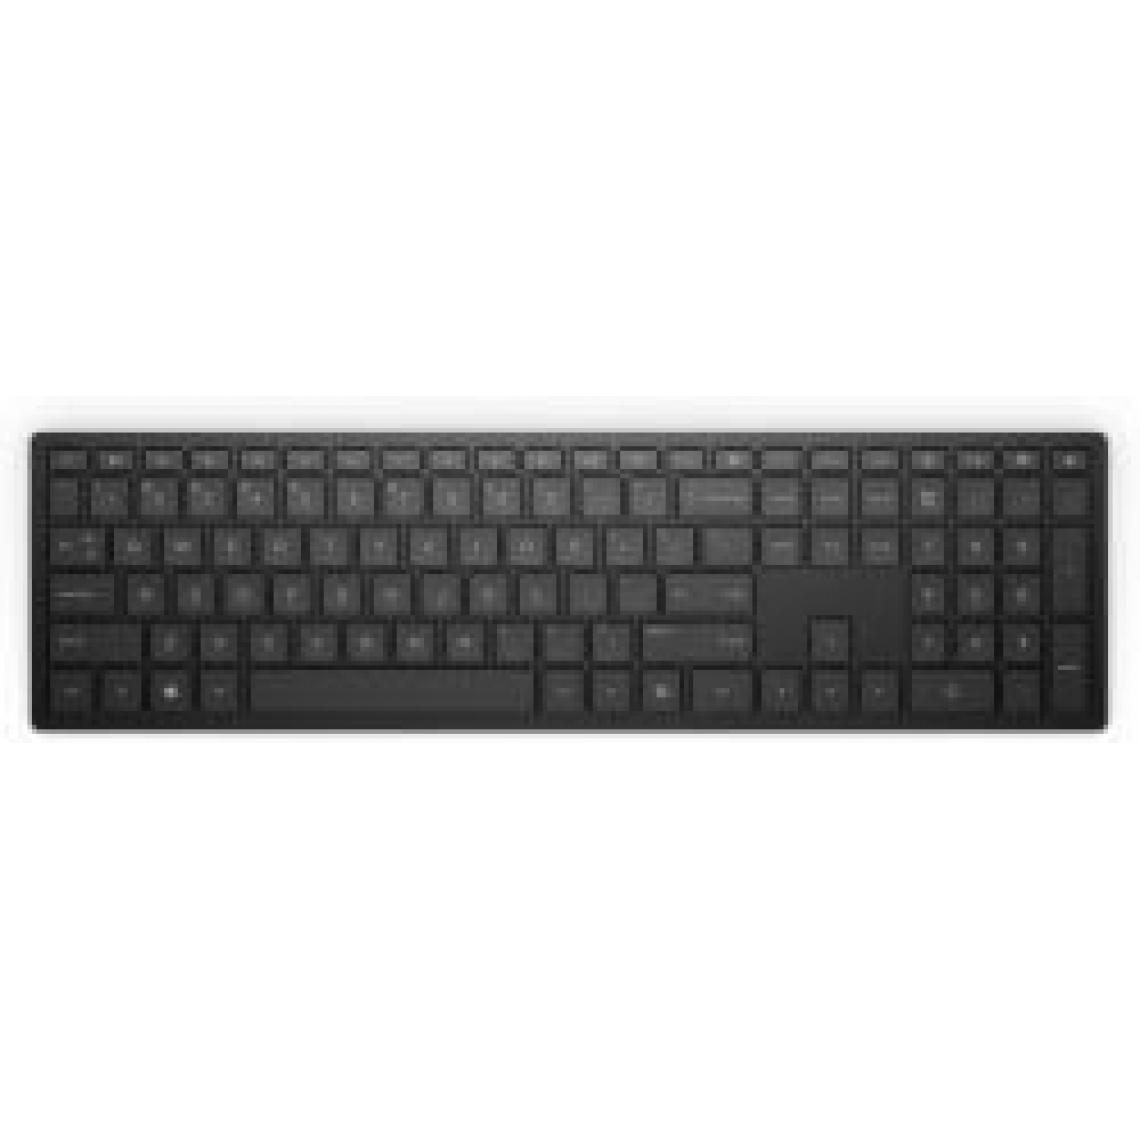 Hp - HP Pavilion 600 clavier RF sans fil Noir (HP Pavilion Wireless Keyboard 600 Black GERMAN) - Clavier